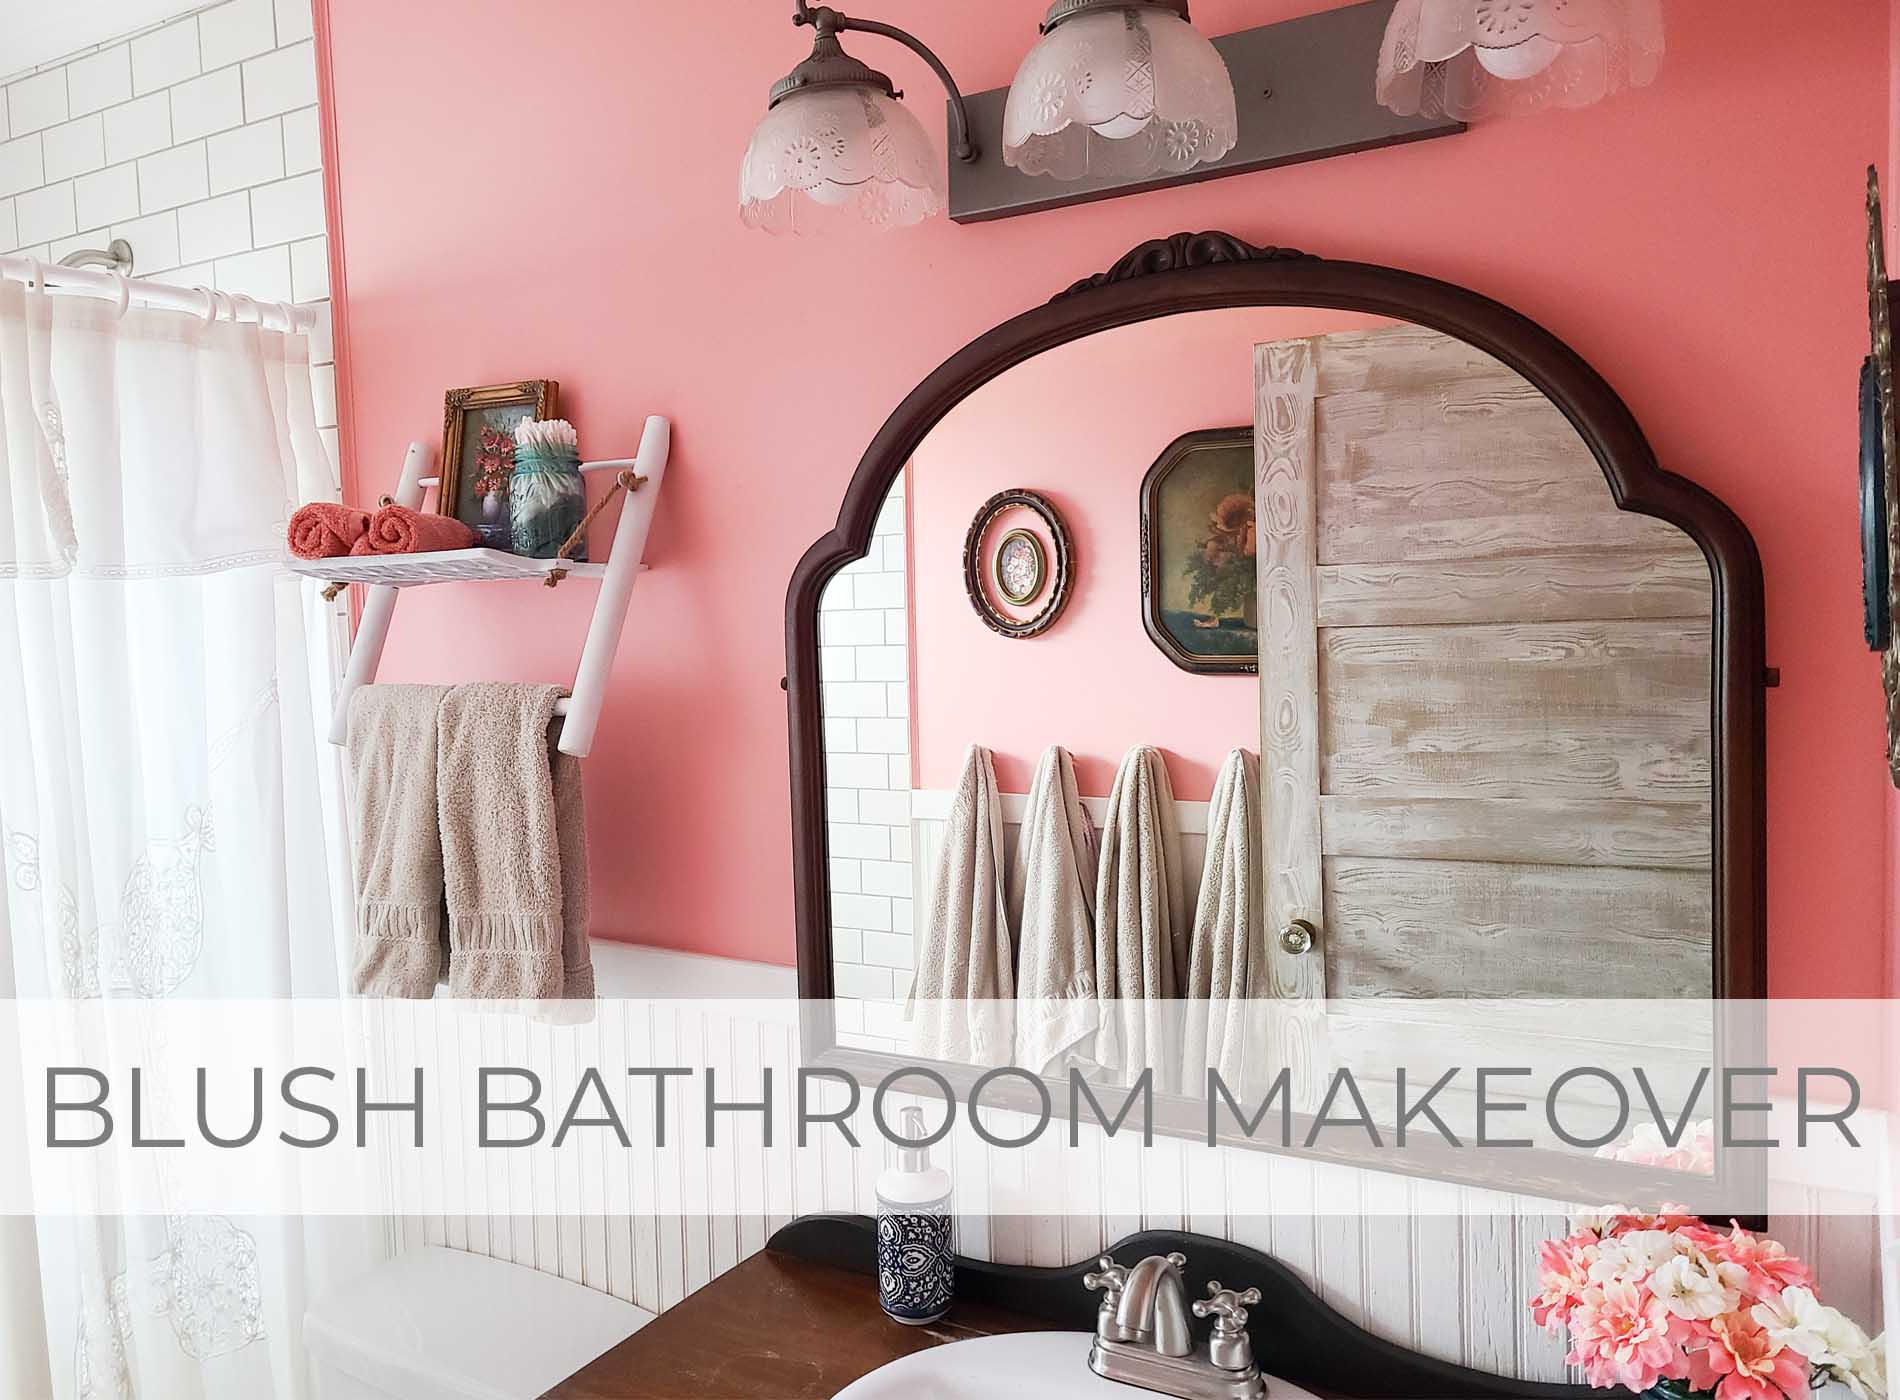 Showcase Blush Bathroom Makeover by Larissa of Prodigal Pieces | prodigalpieces.com #prodigalpieces